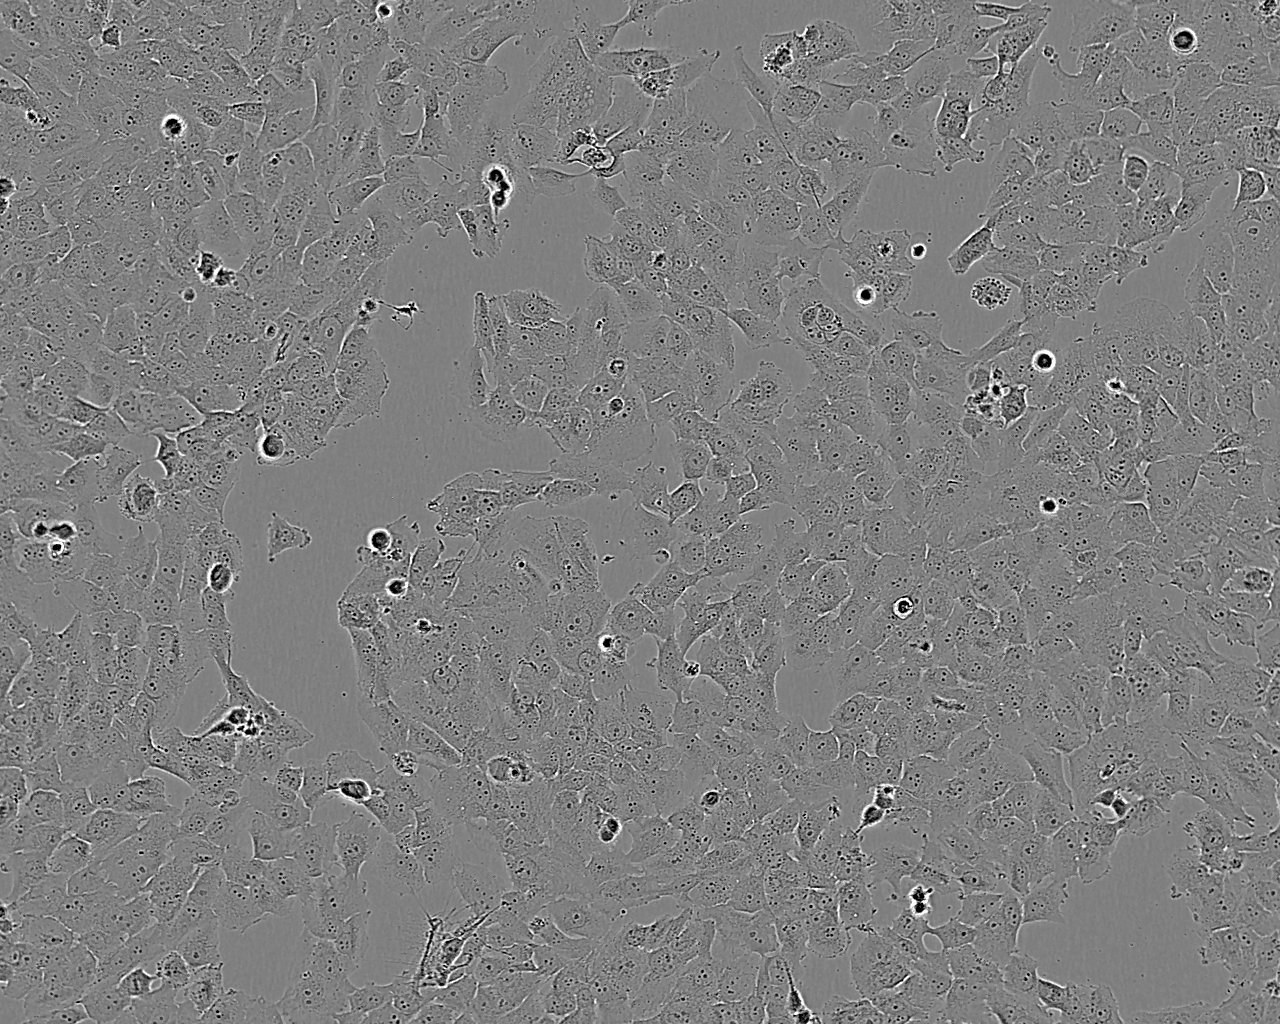 COLO 829 Cell:人黑色素瘤细胞系,COLO 829 Cell